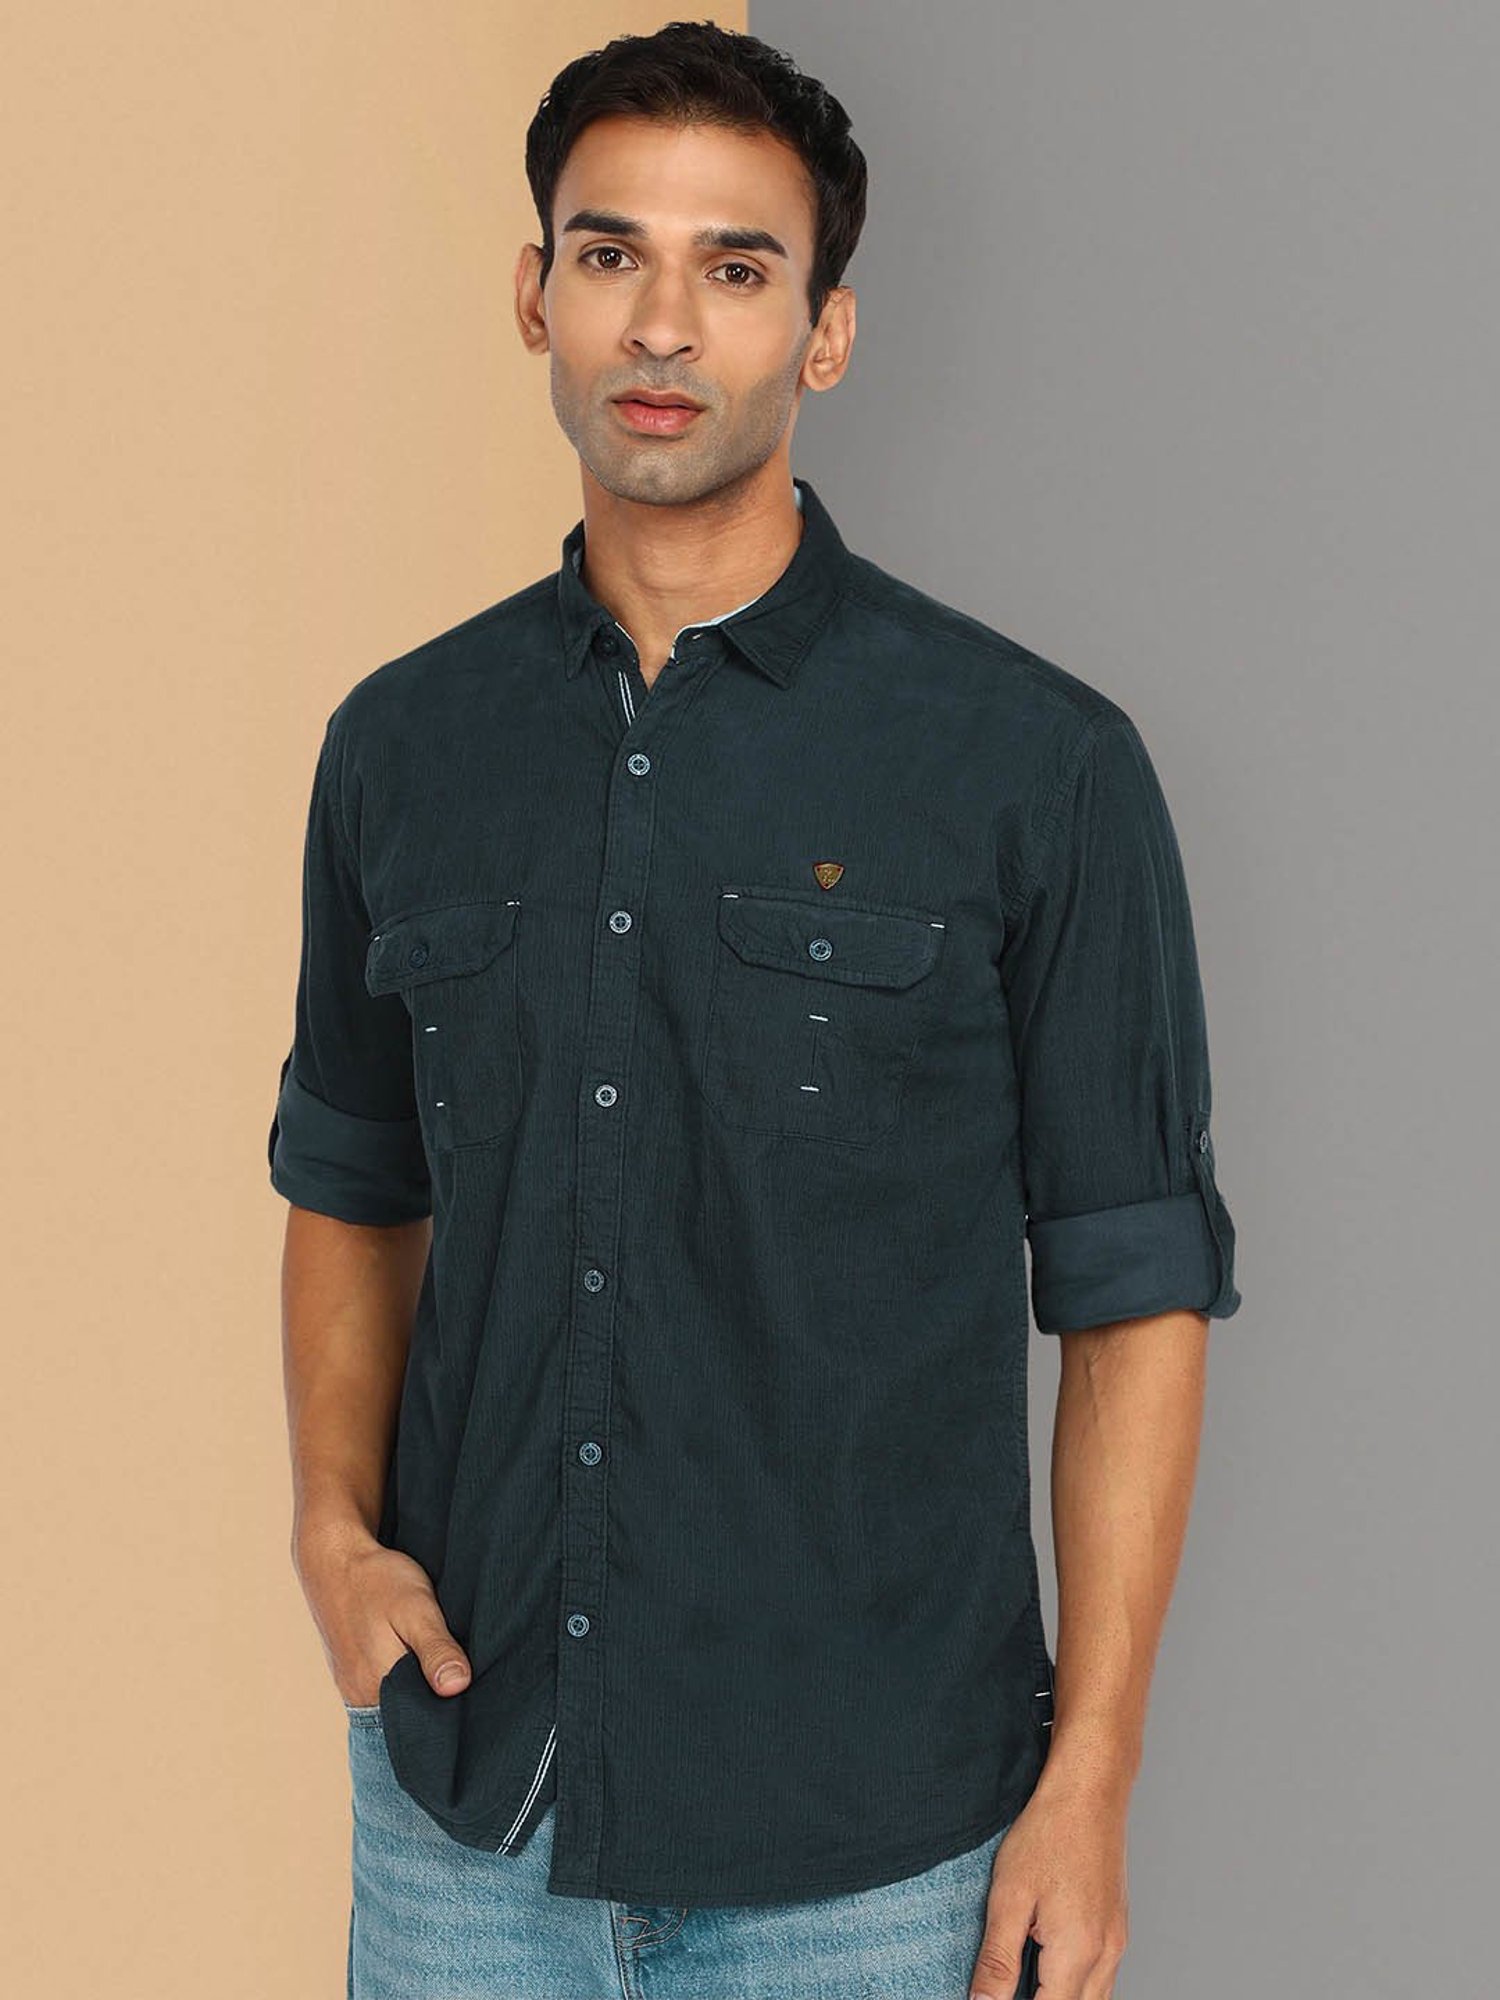 Vetements - Embroidered Distressed Denim Shirt - Men - Black Vetements